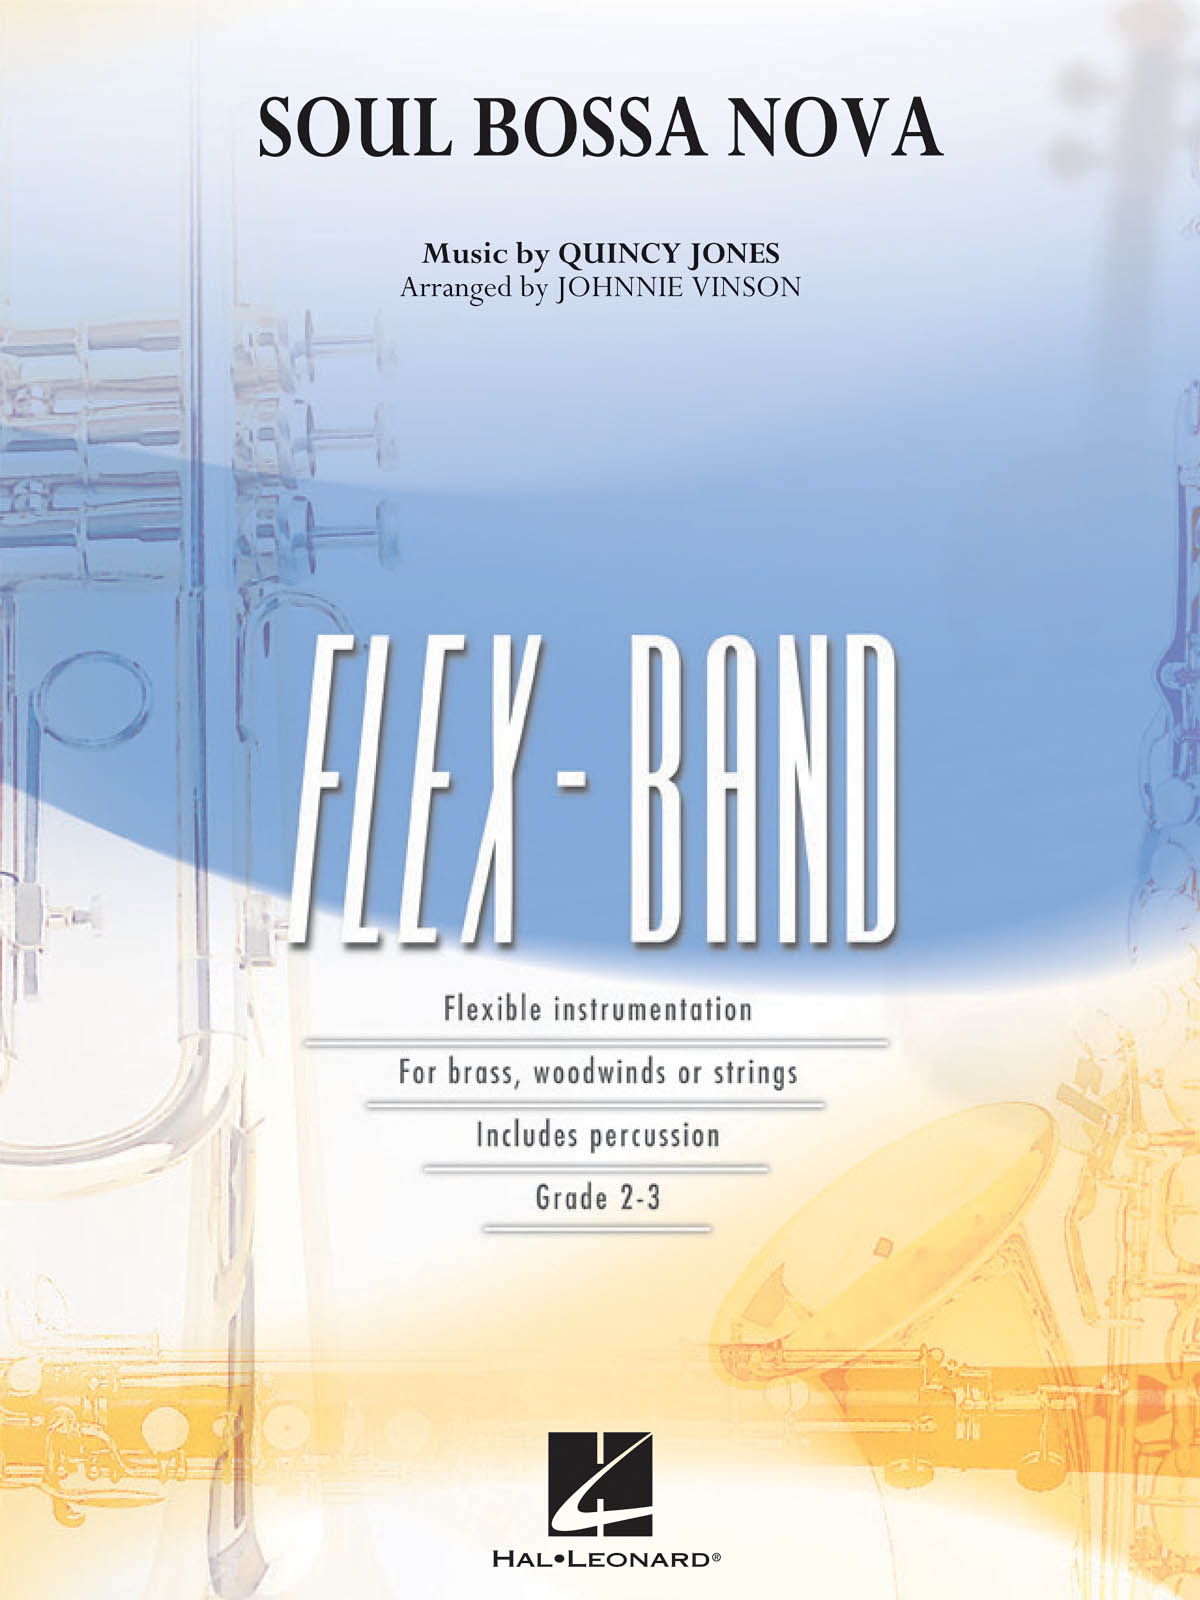 Quincy Jones: Soul Bossa Nova - Flexband: Concert Band: Score